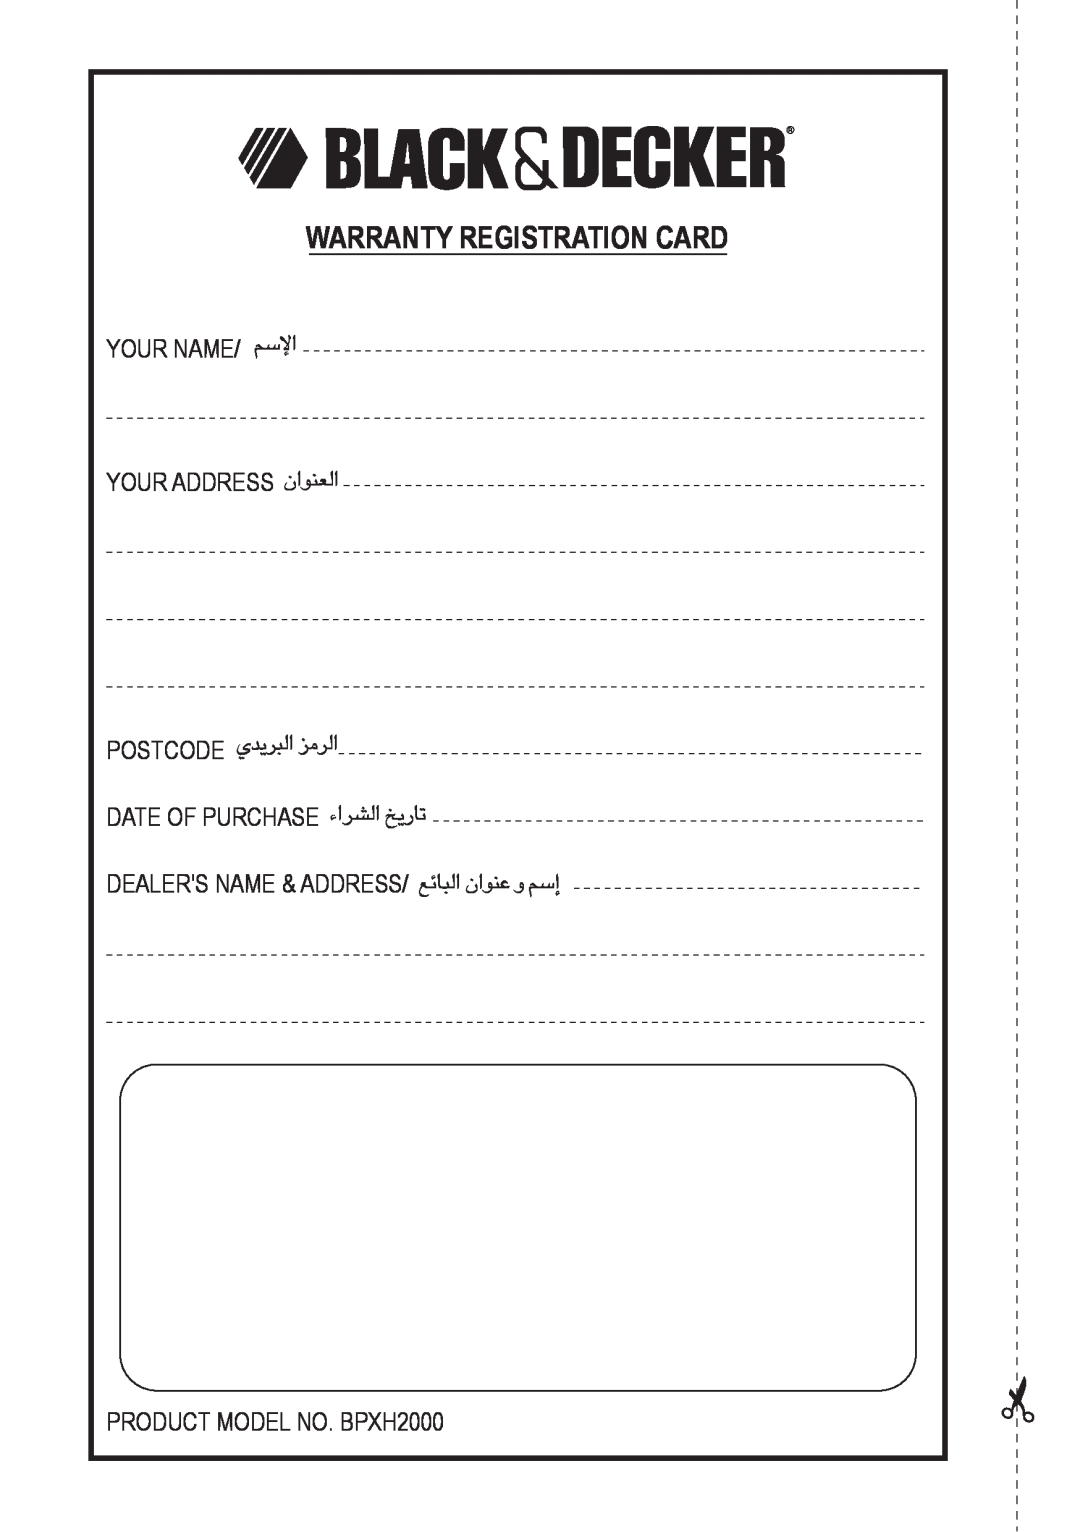 Black & Decker BPXH2000 manual Warranty Registration Card, «ùßr 